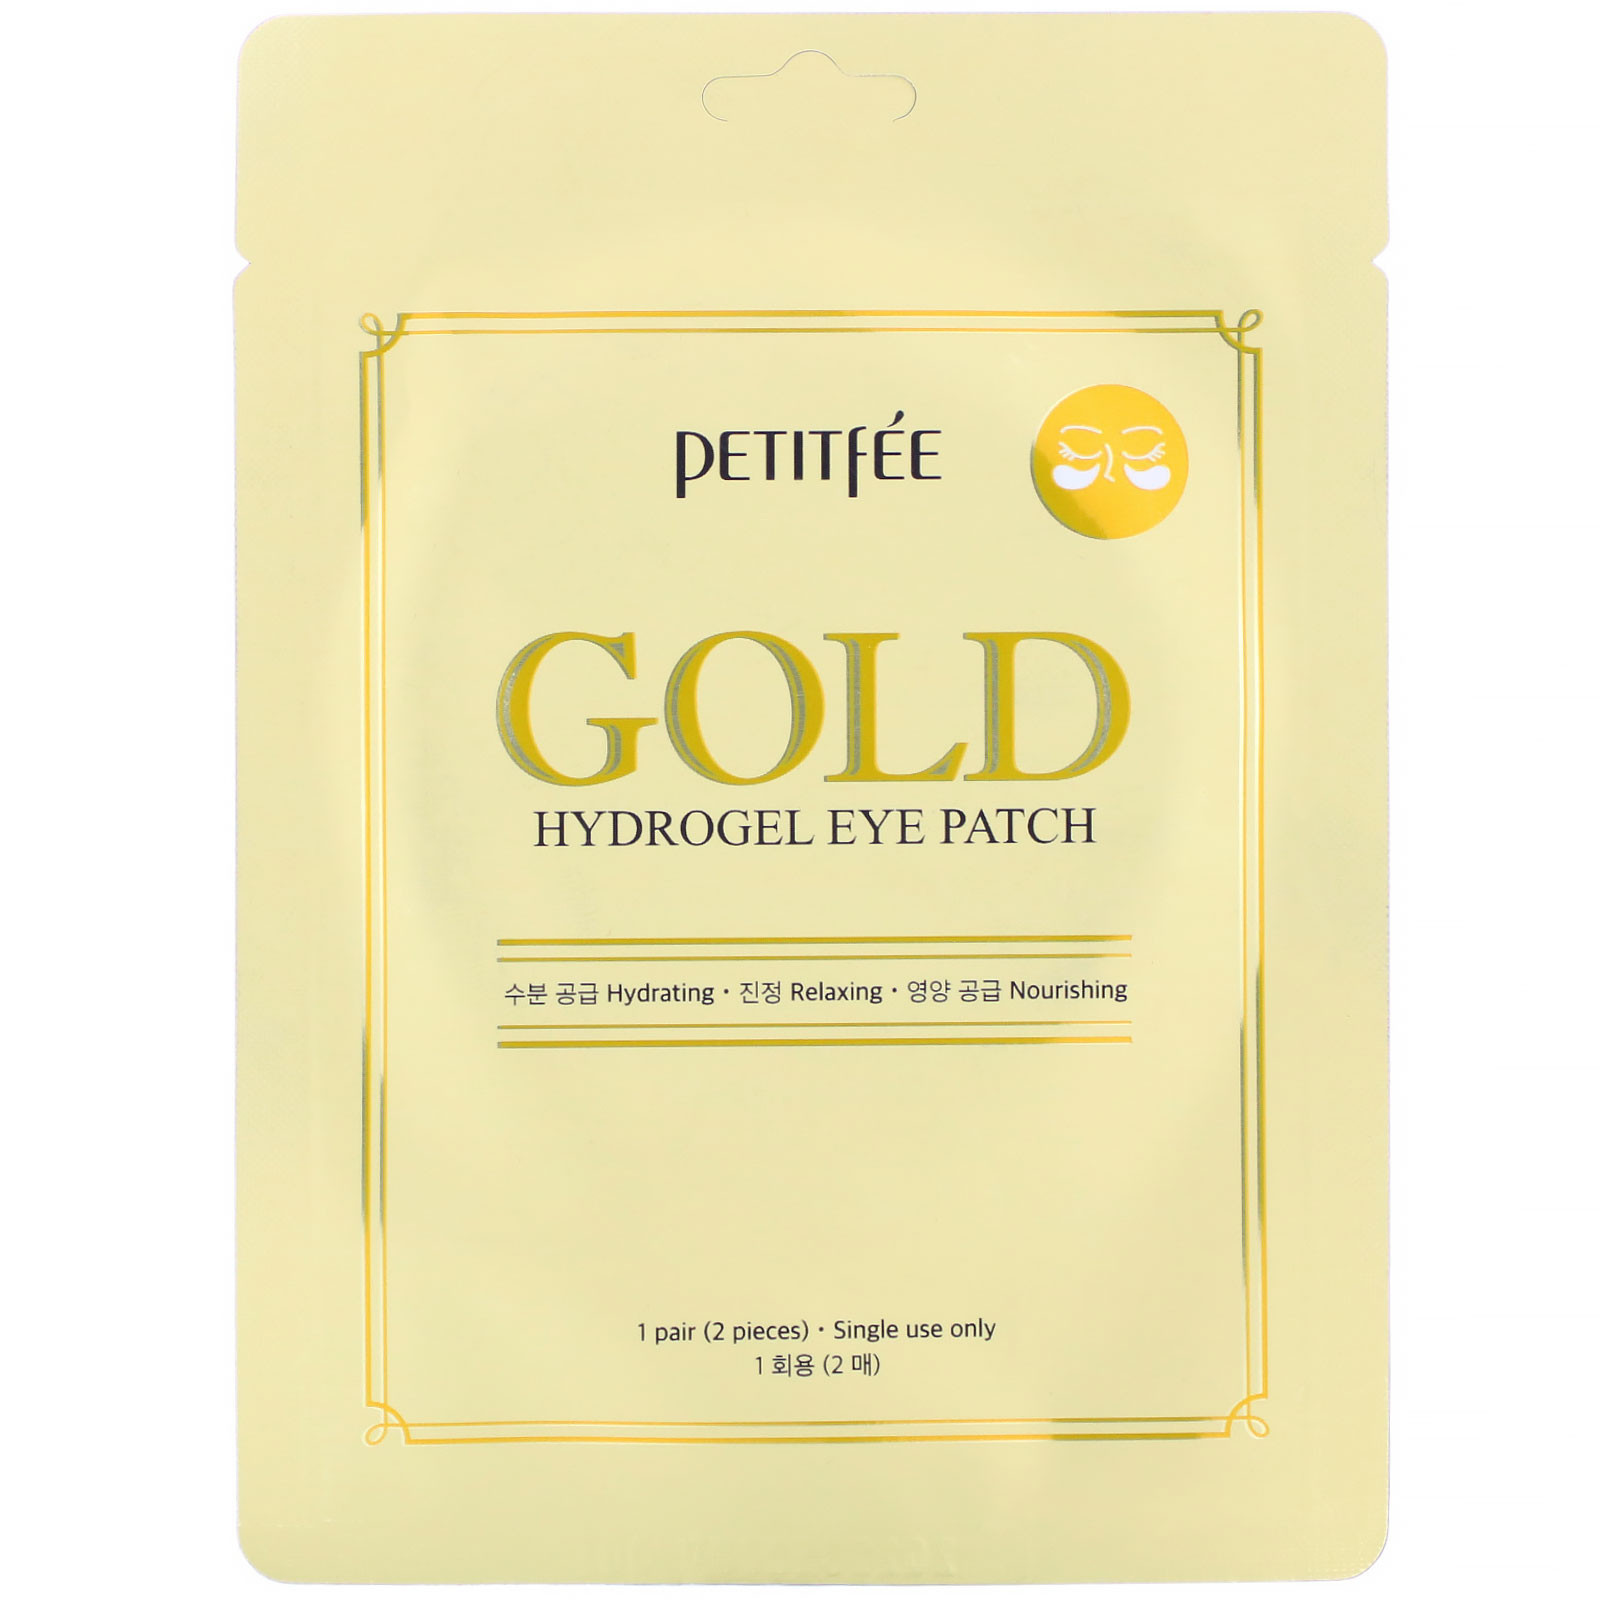 Gold hydrogel patch